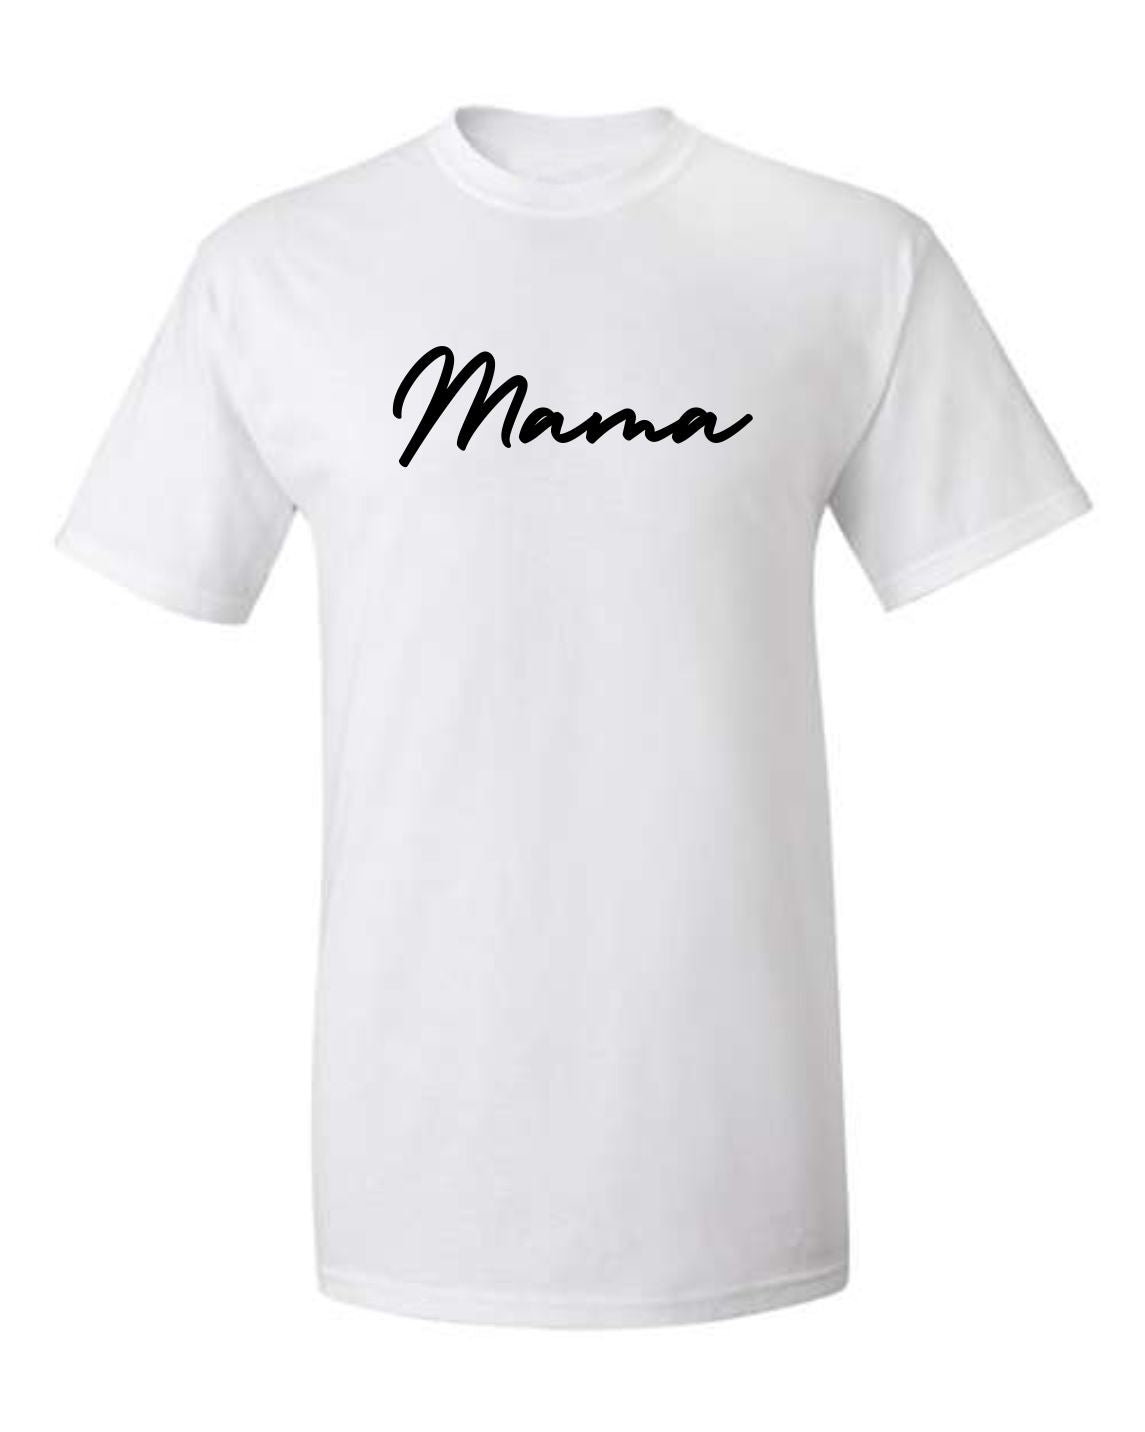 "Mama" T-Shirt